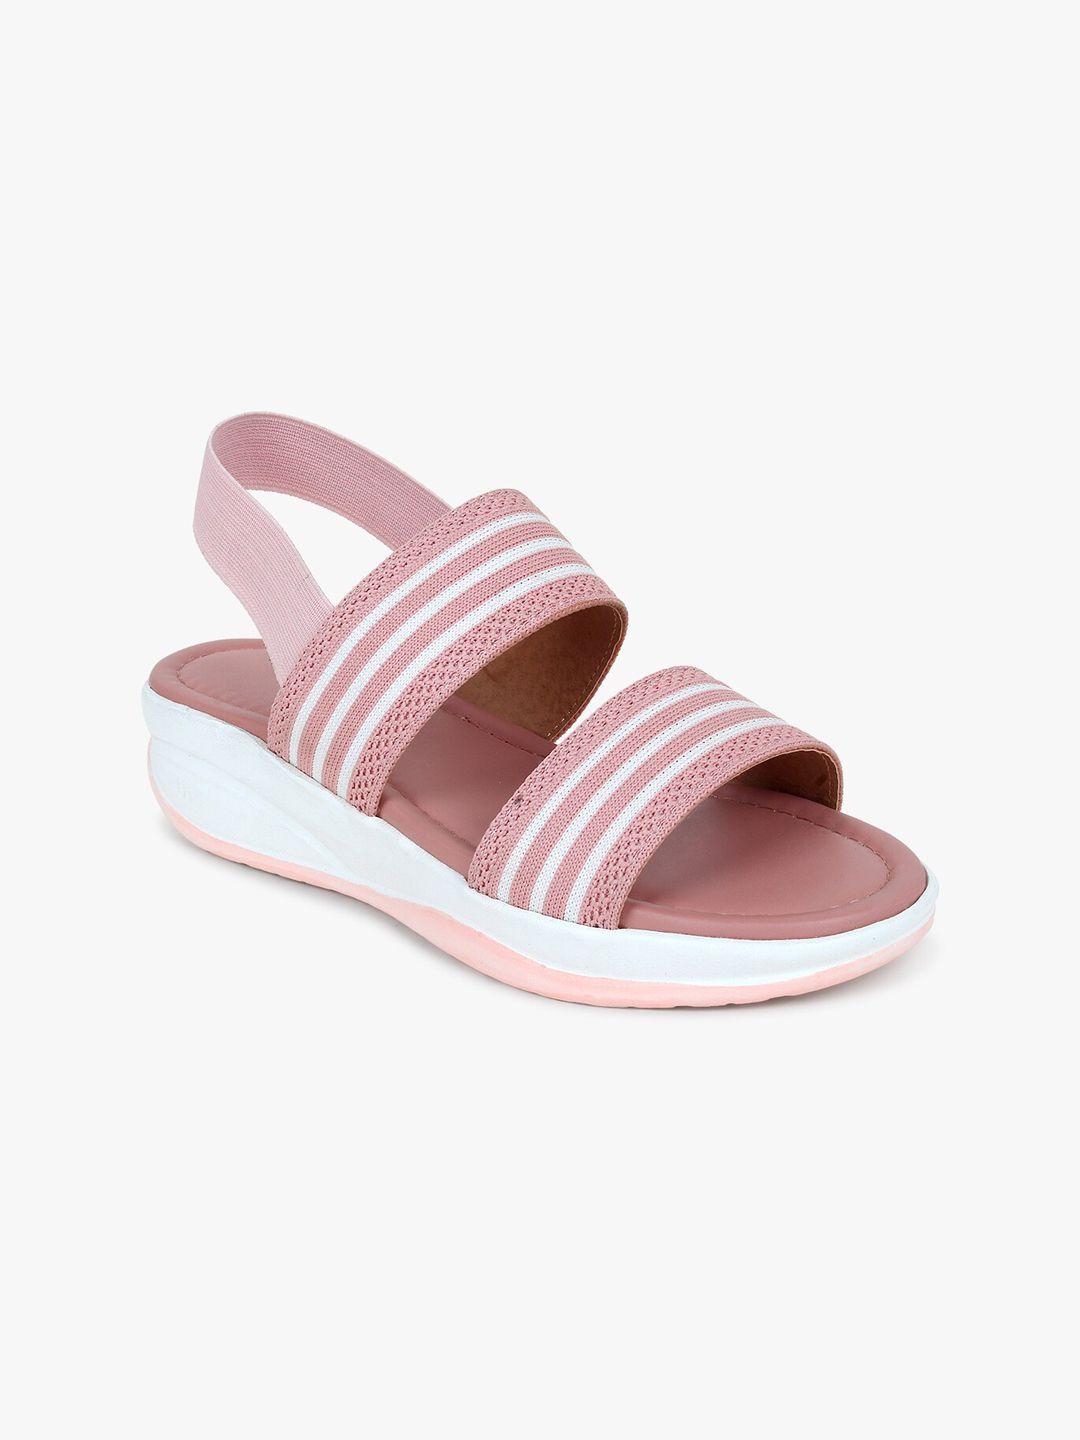 glitzy galz women pink striped open toe flats